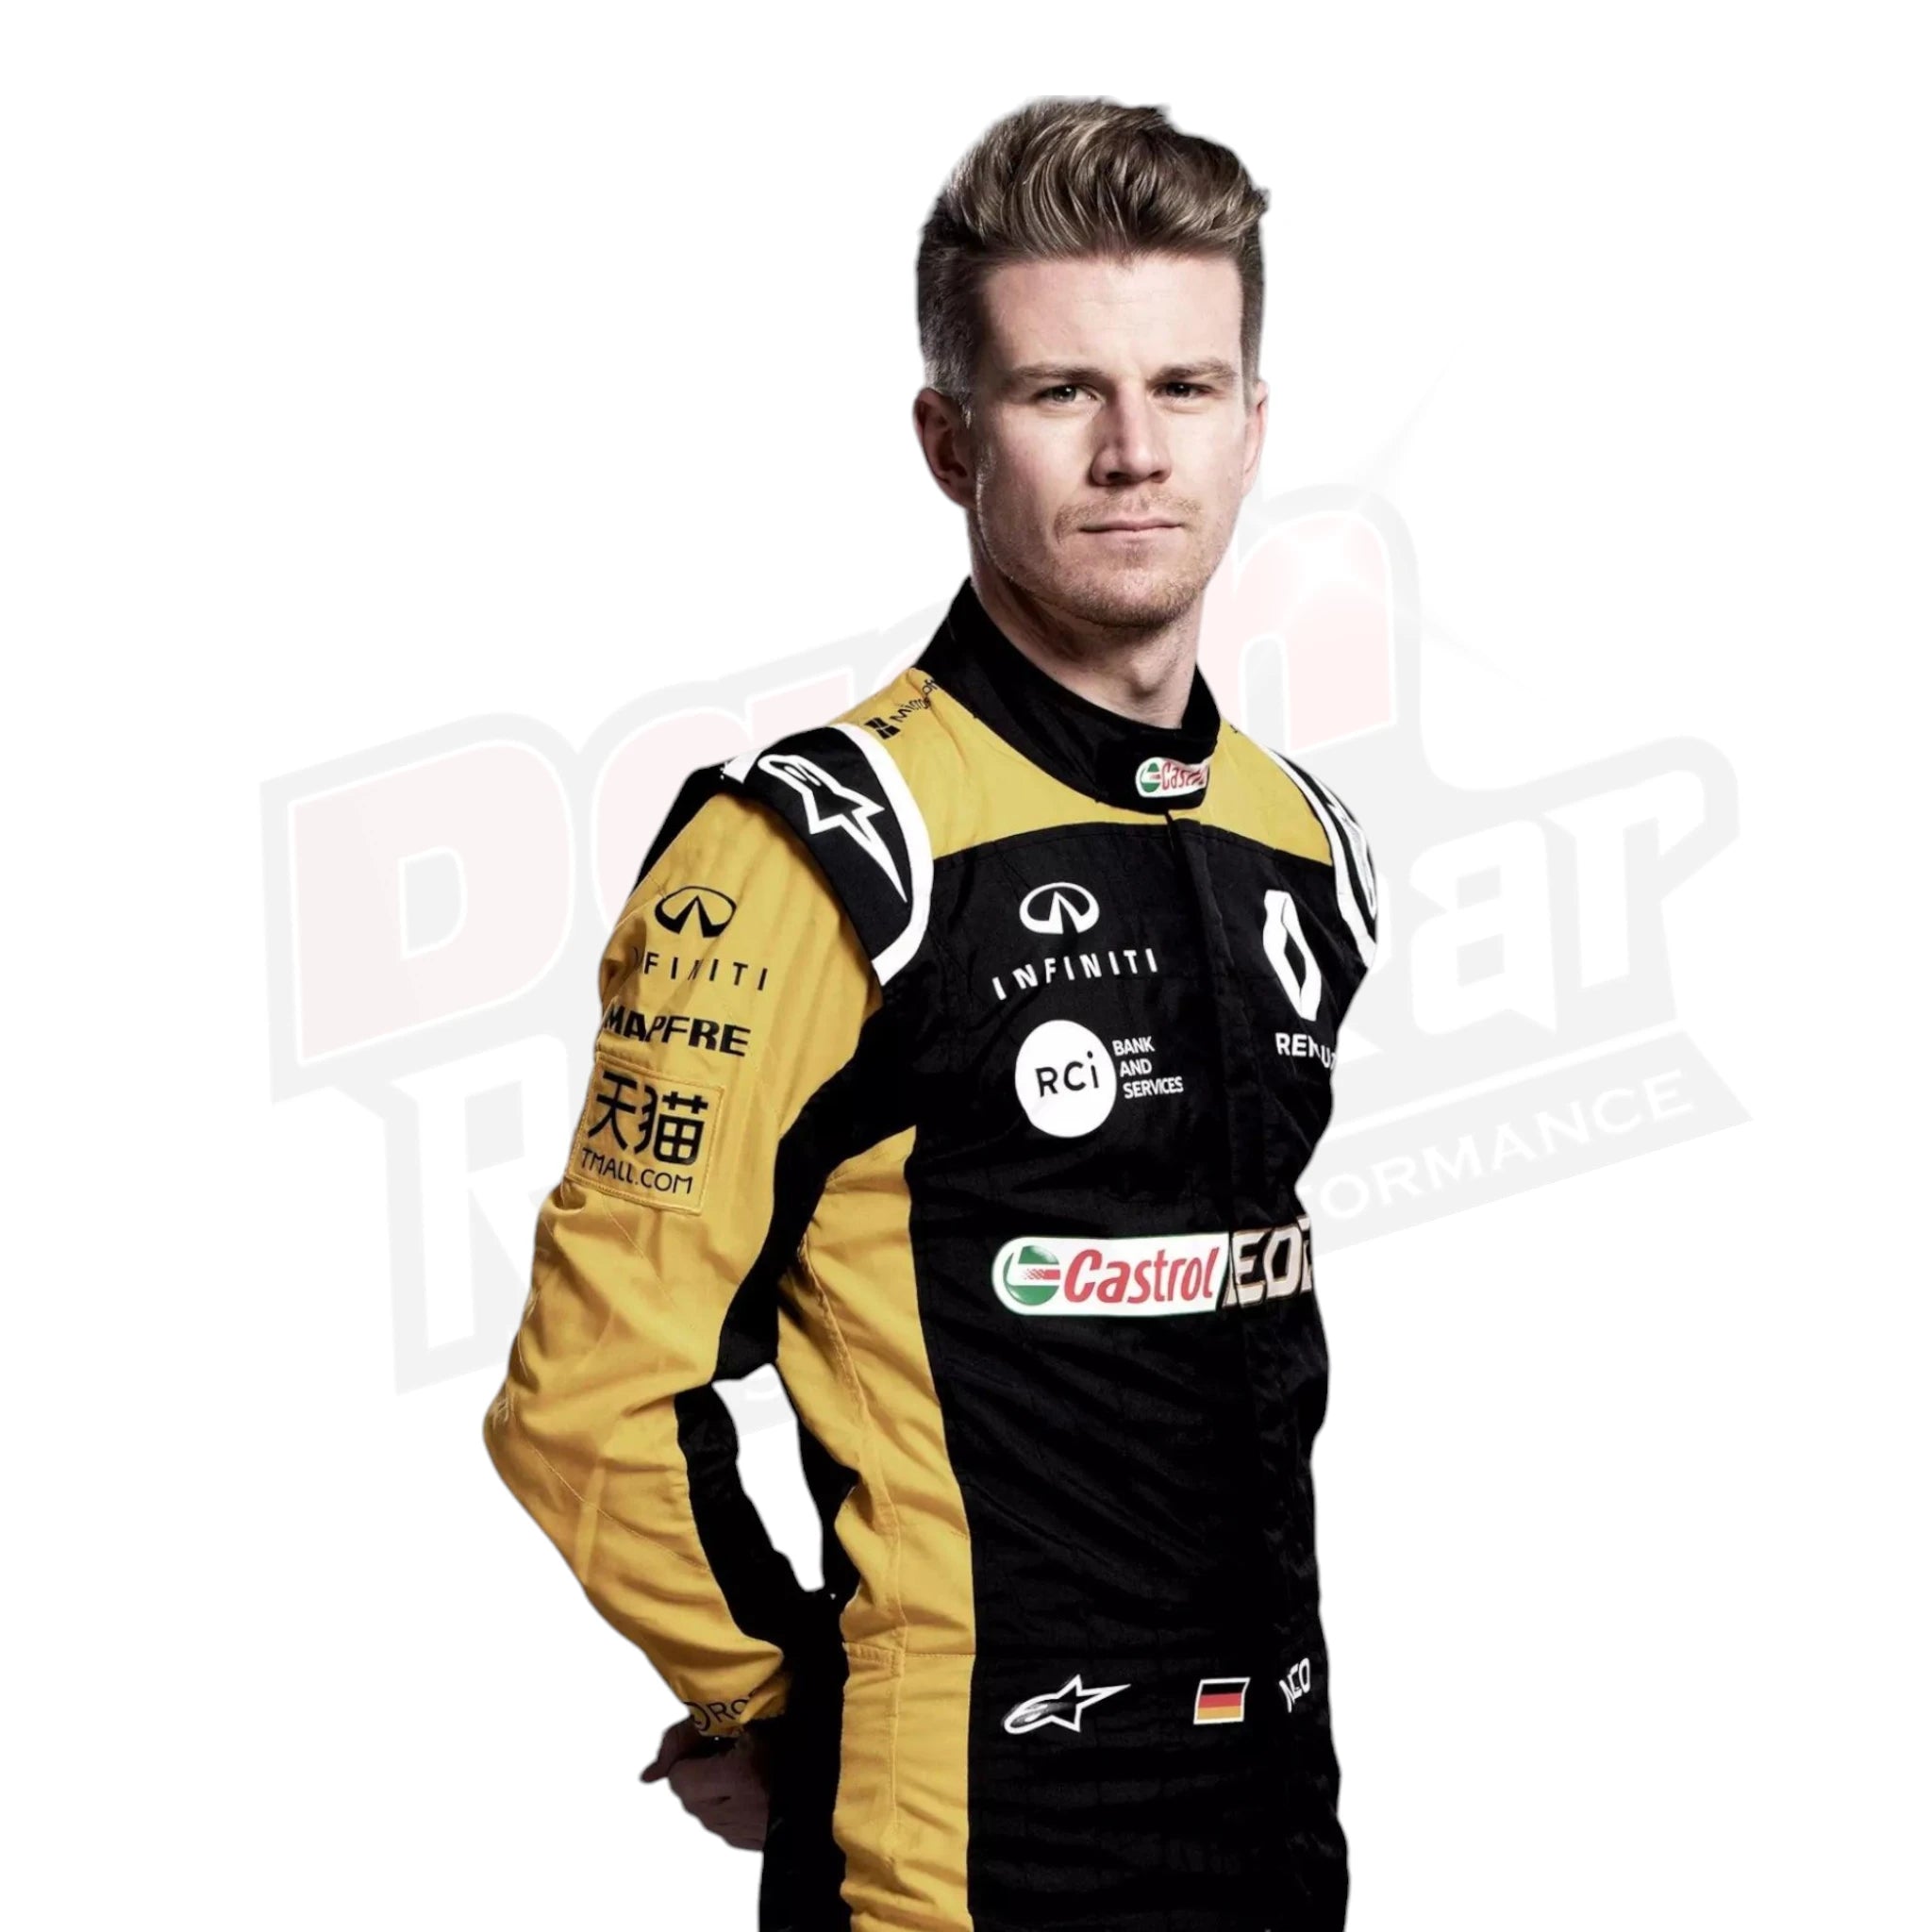 Nico Hulkenberg 2018 Renault F1 Team Race Suit